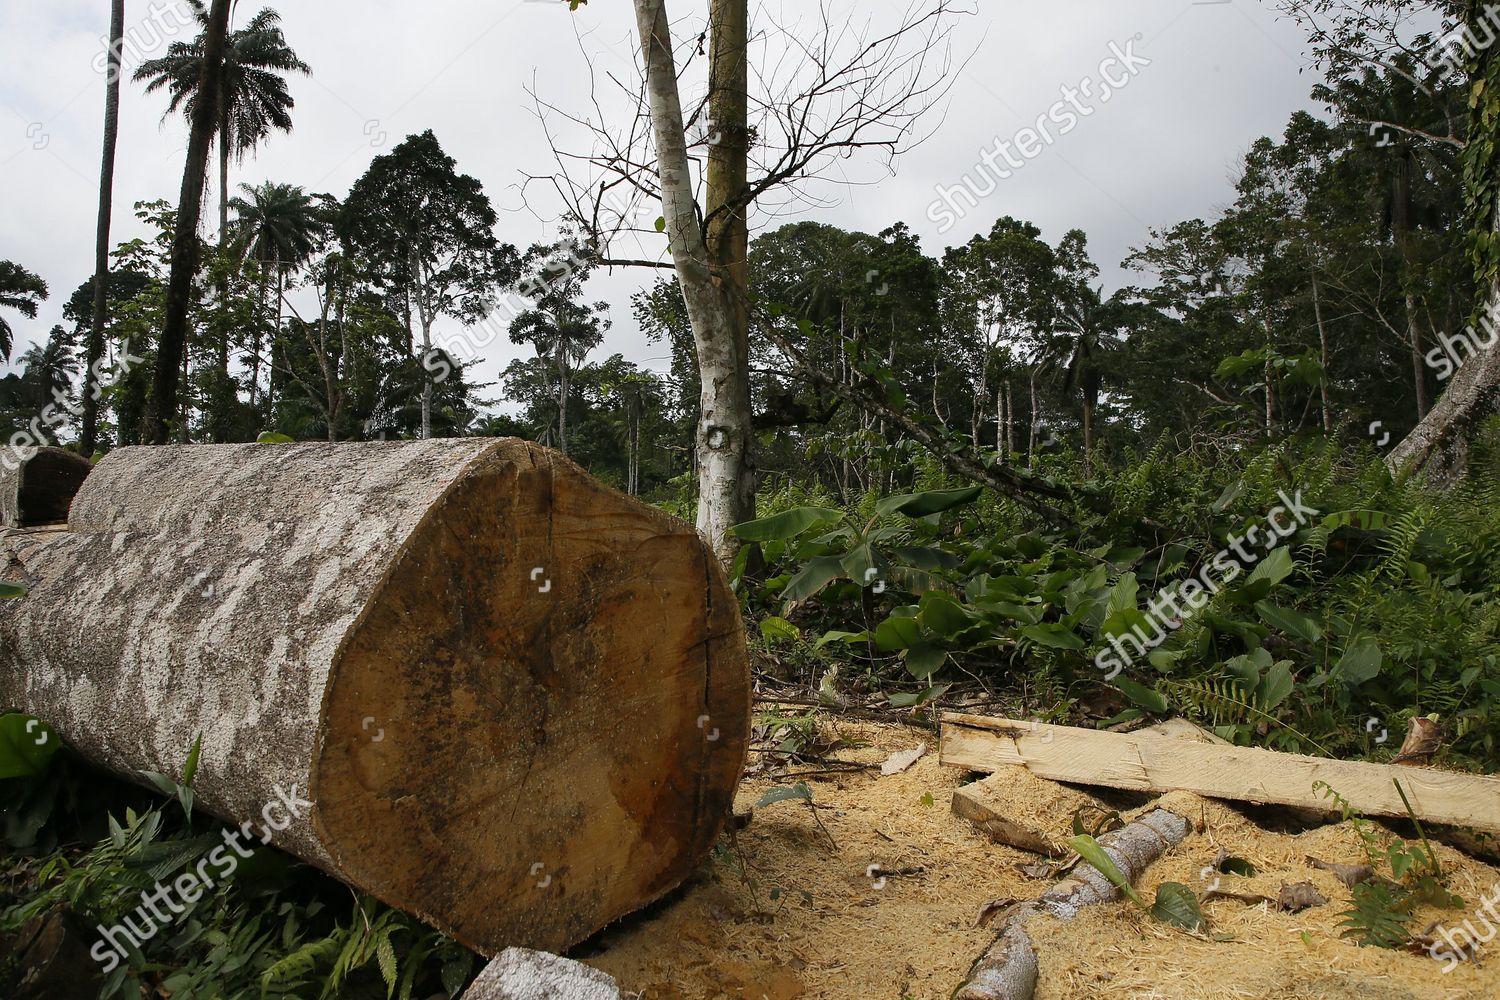 View Felled Tree Forest Alepe Region Cocoa Photos Editoriales Libres De Droits Image Libre De Droits Shutterstock